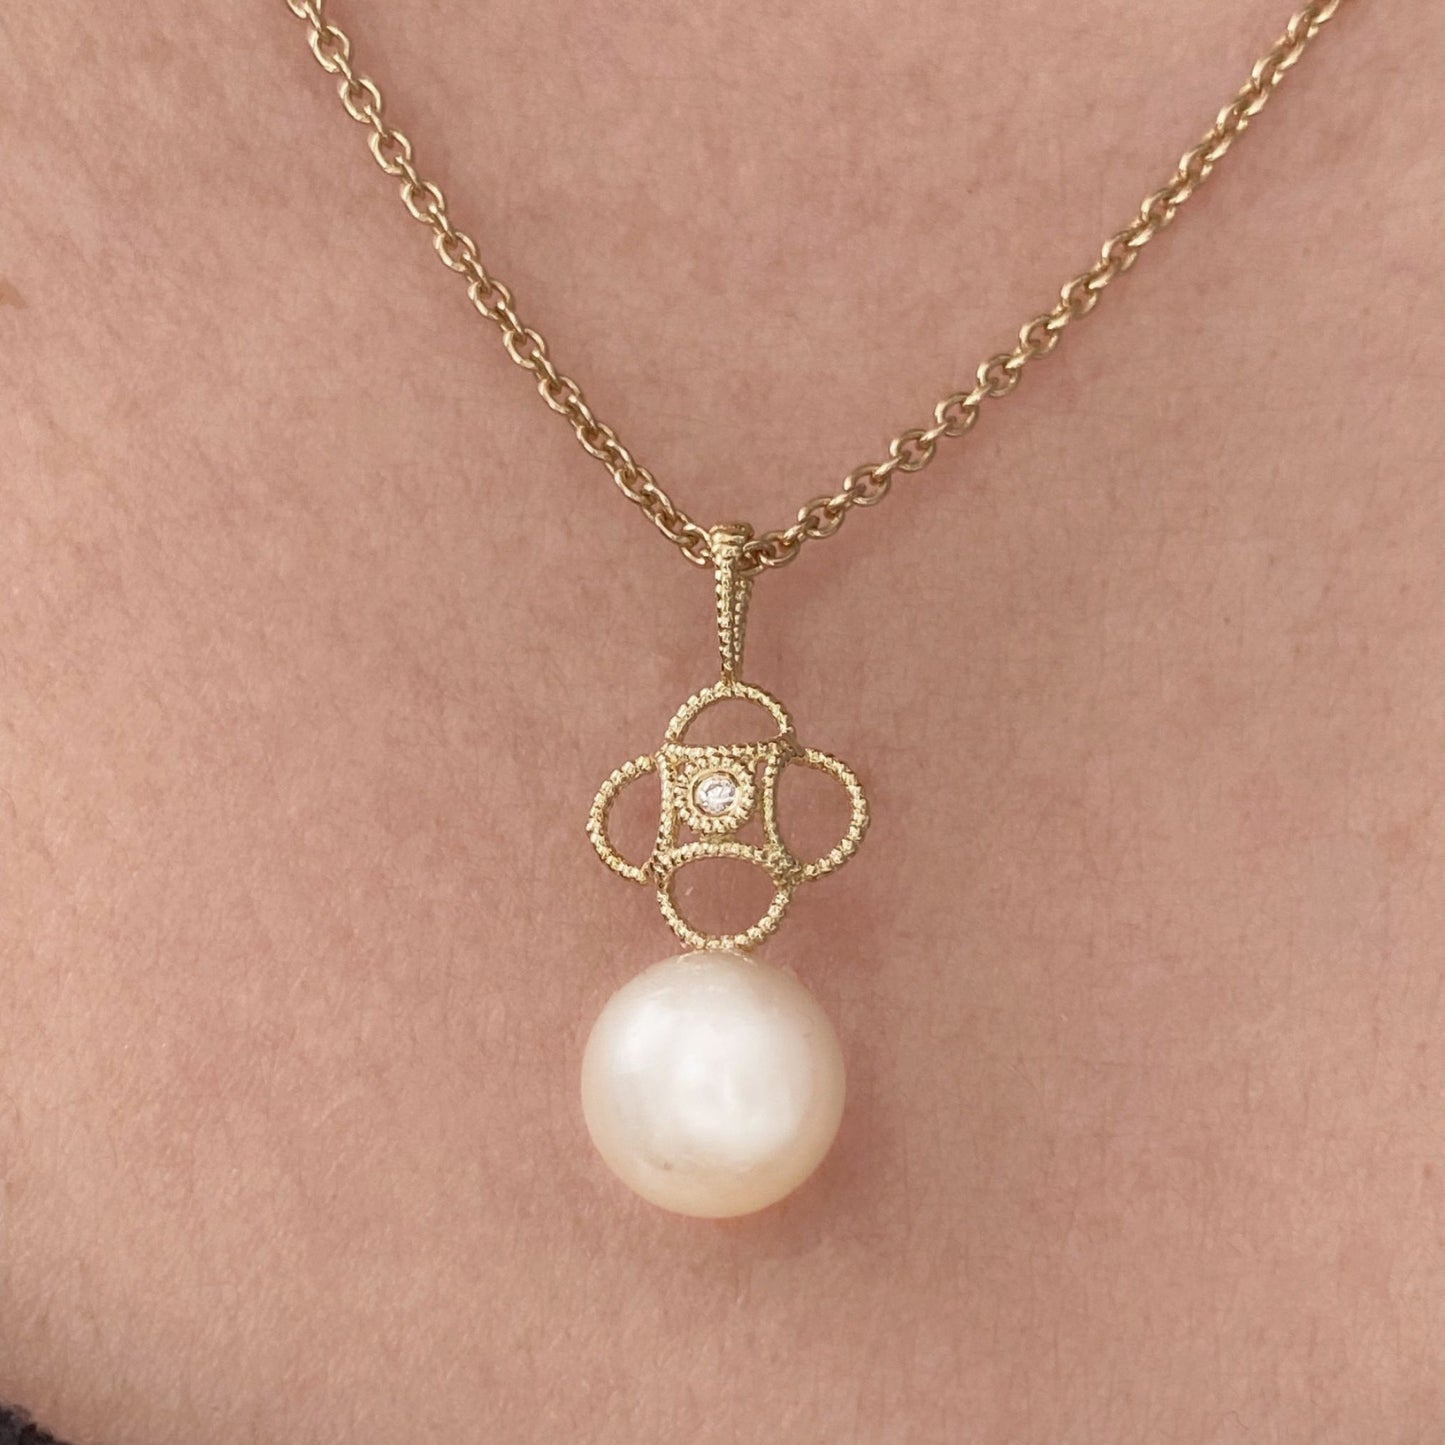 Zivka Diamond and Pearl Pendant